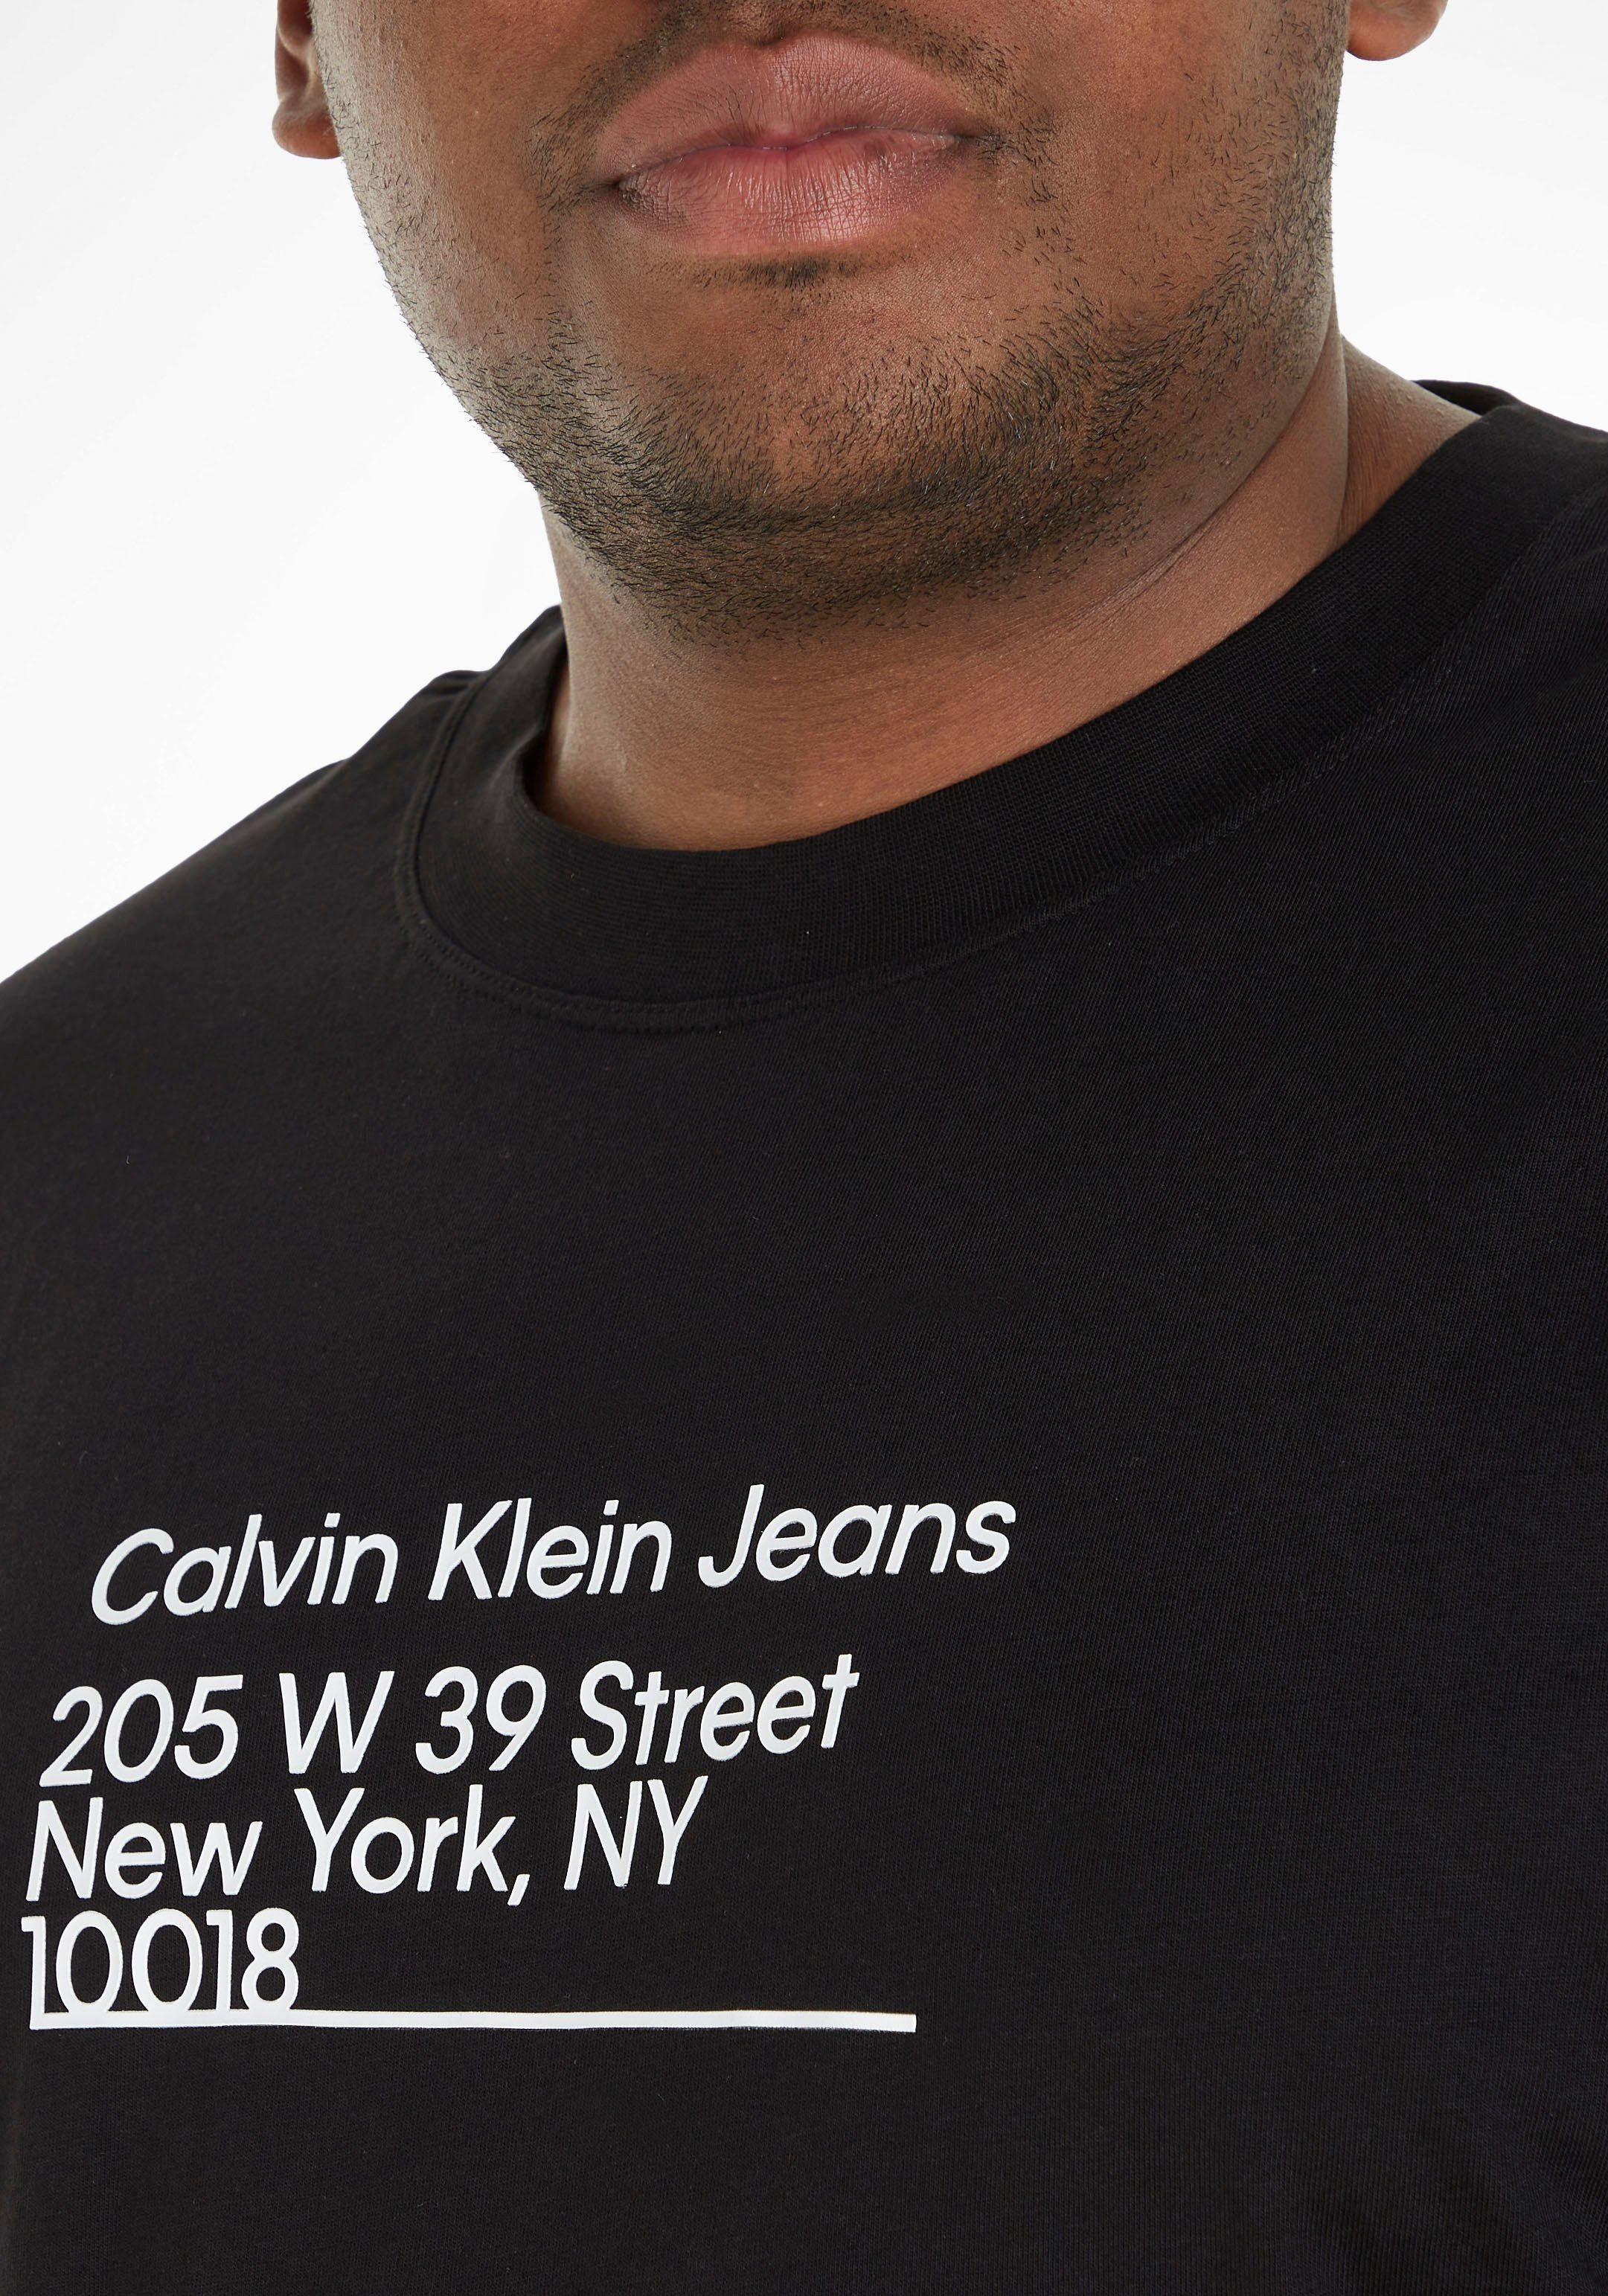 TEE CK PLUS LOGO Jeans T-Shirt Plus Calvin ADDRESS Klein